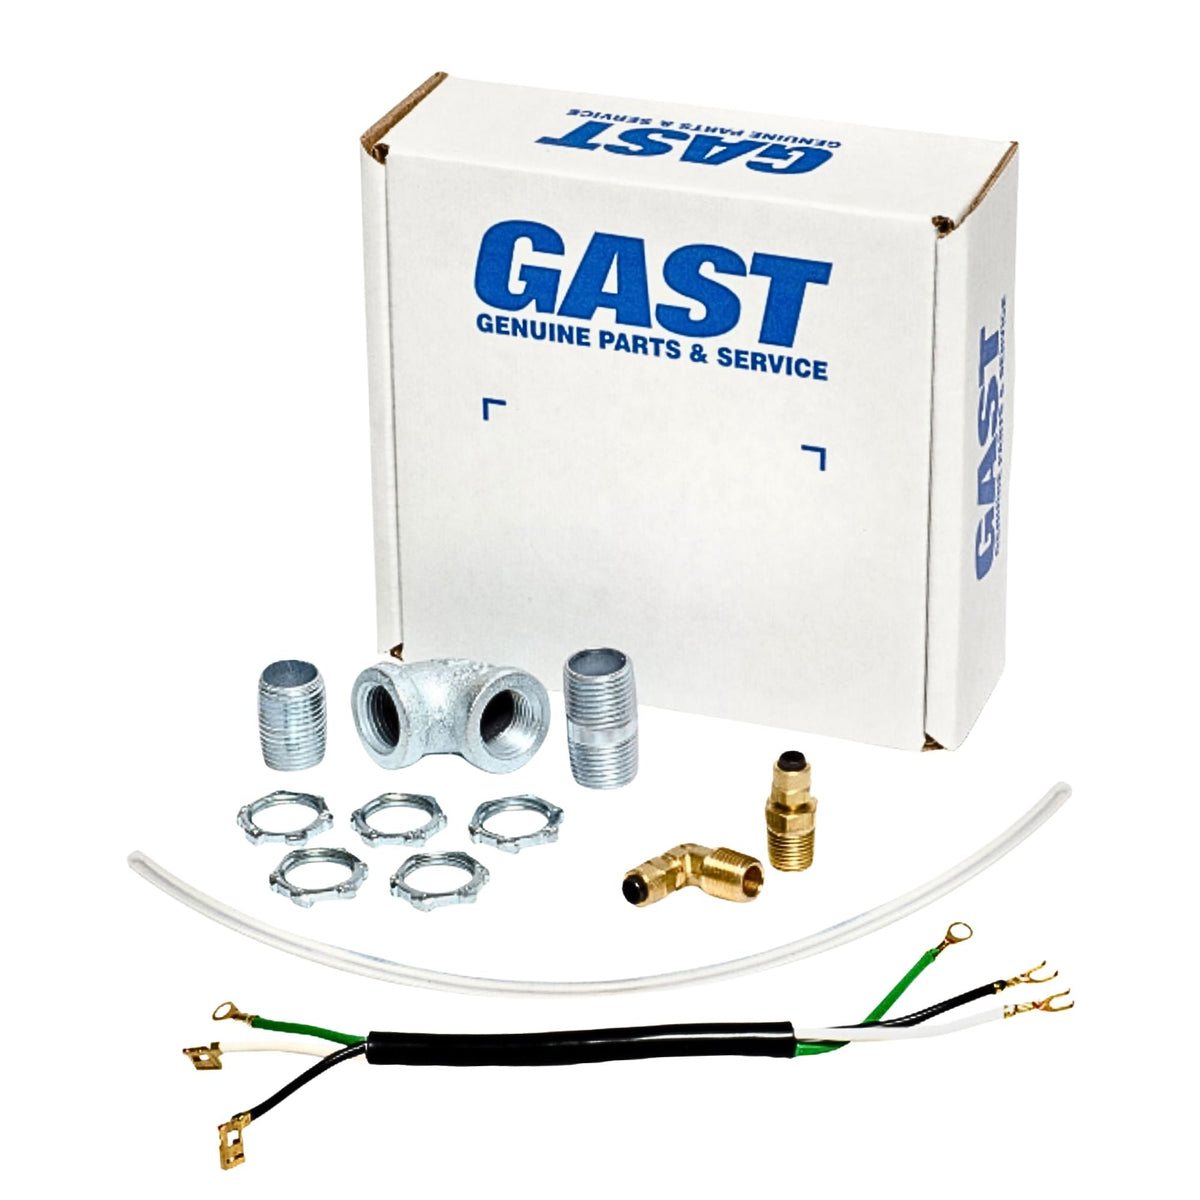 Gast | Mounting Hardware Kit | K954 used on gast product line